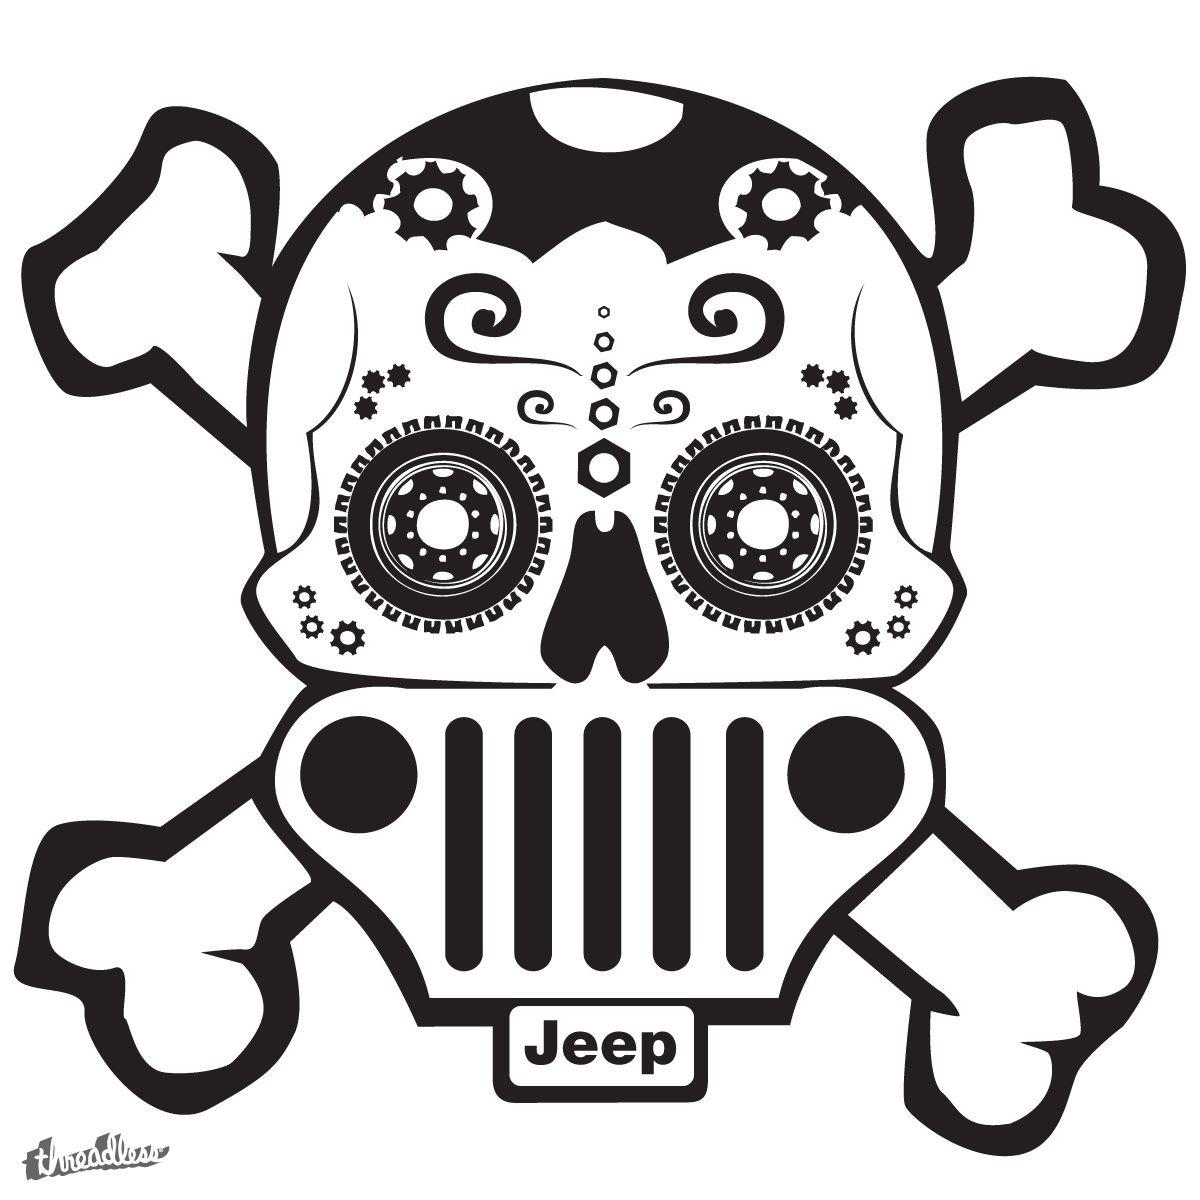 Jeep Skull Logo - Score Jeep Sugar Skull Art by blackpawcanvas on Threadless